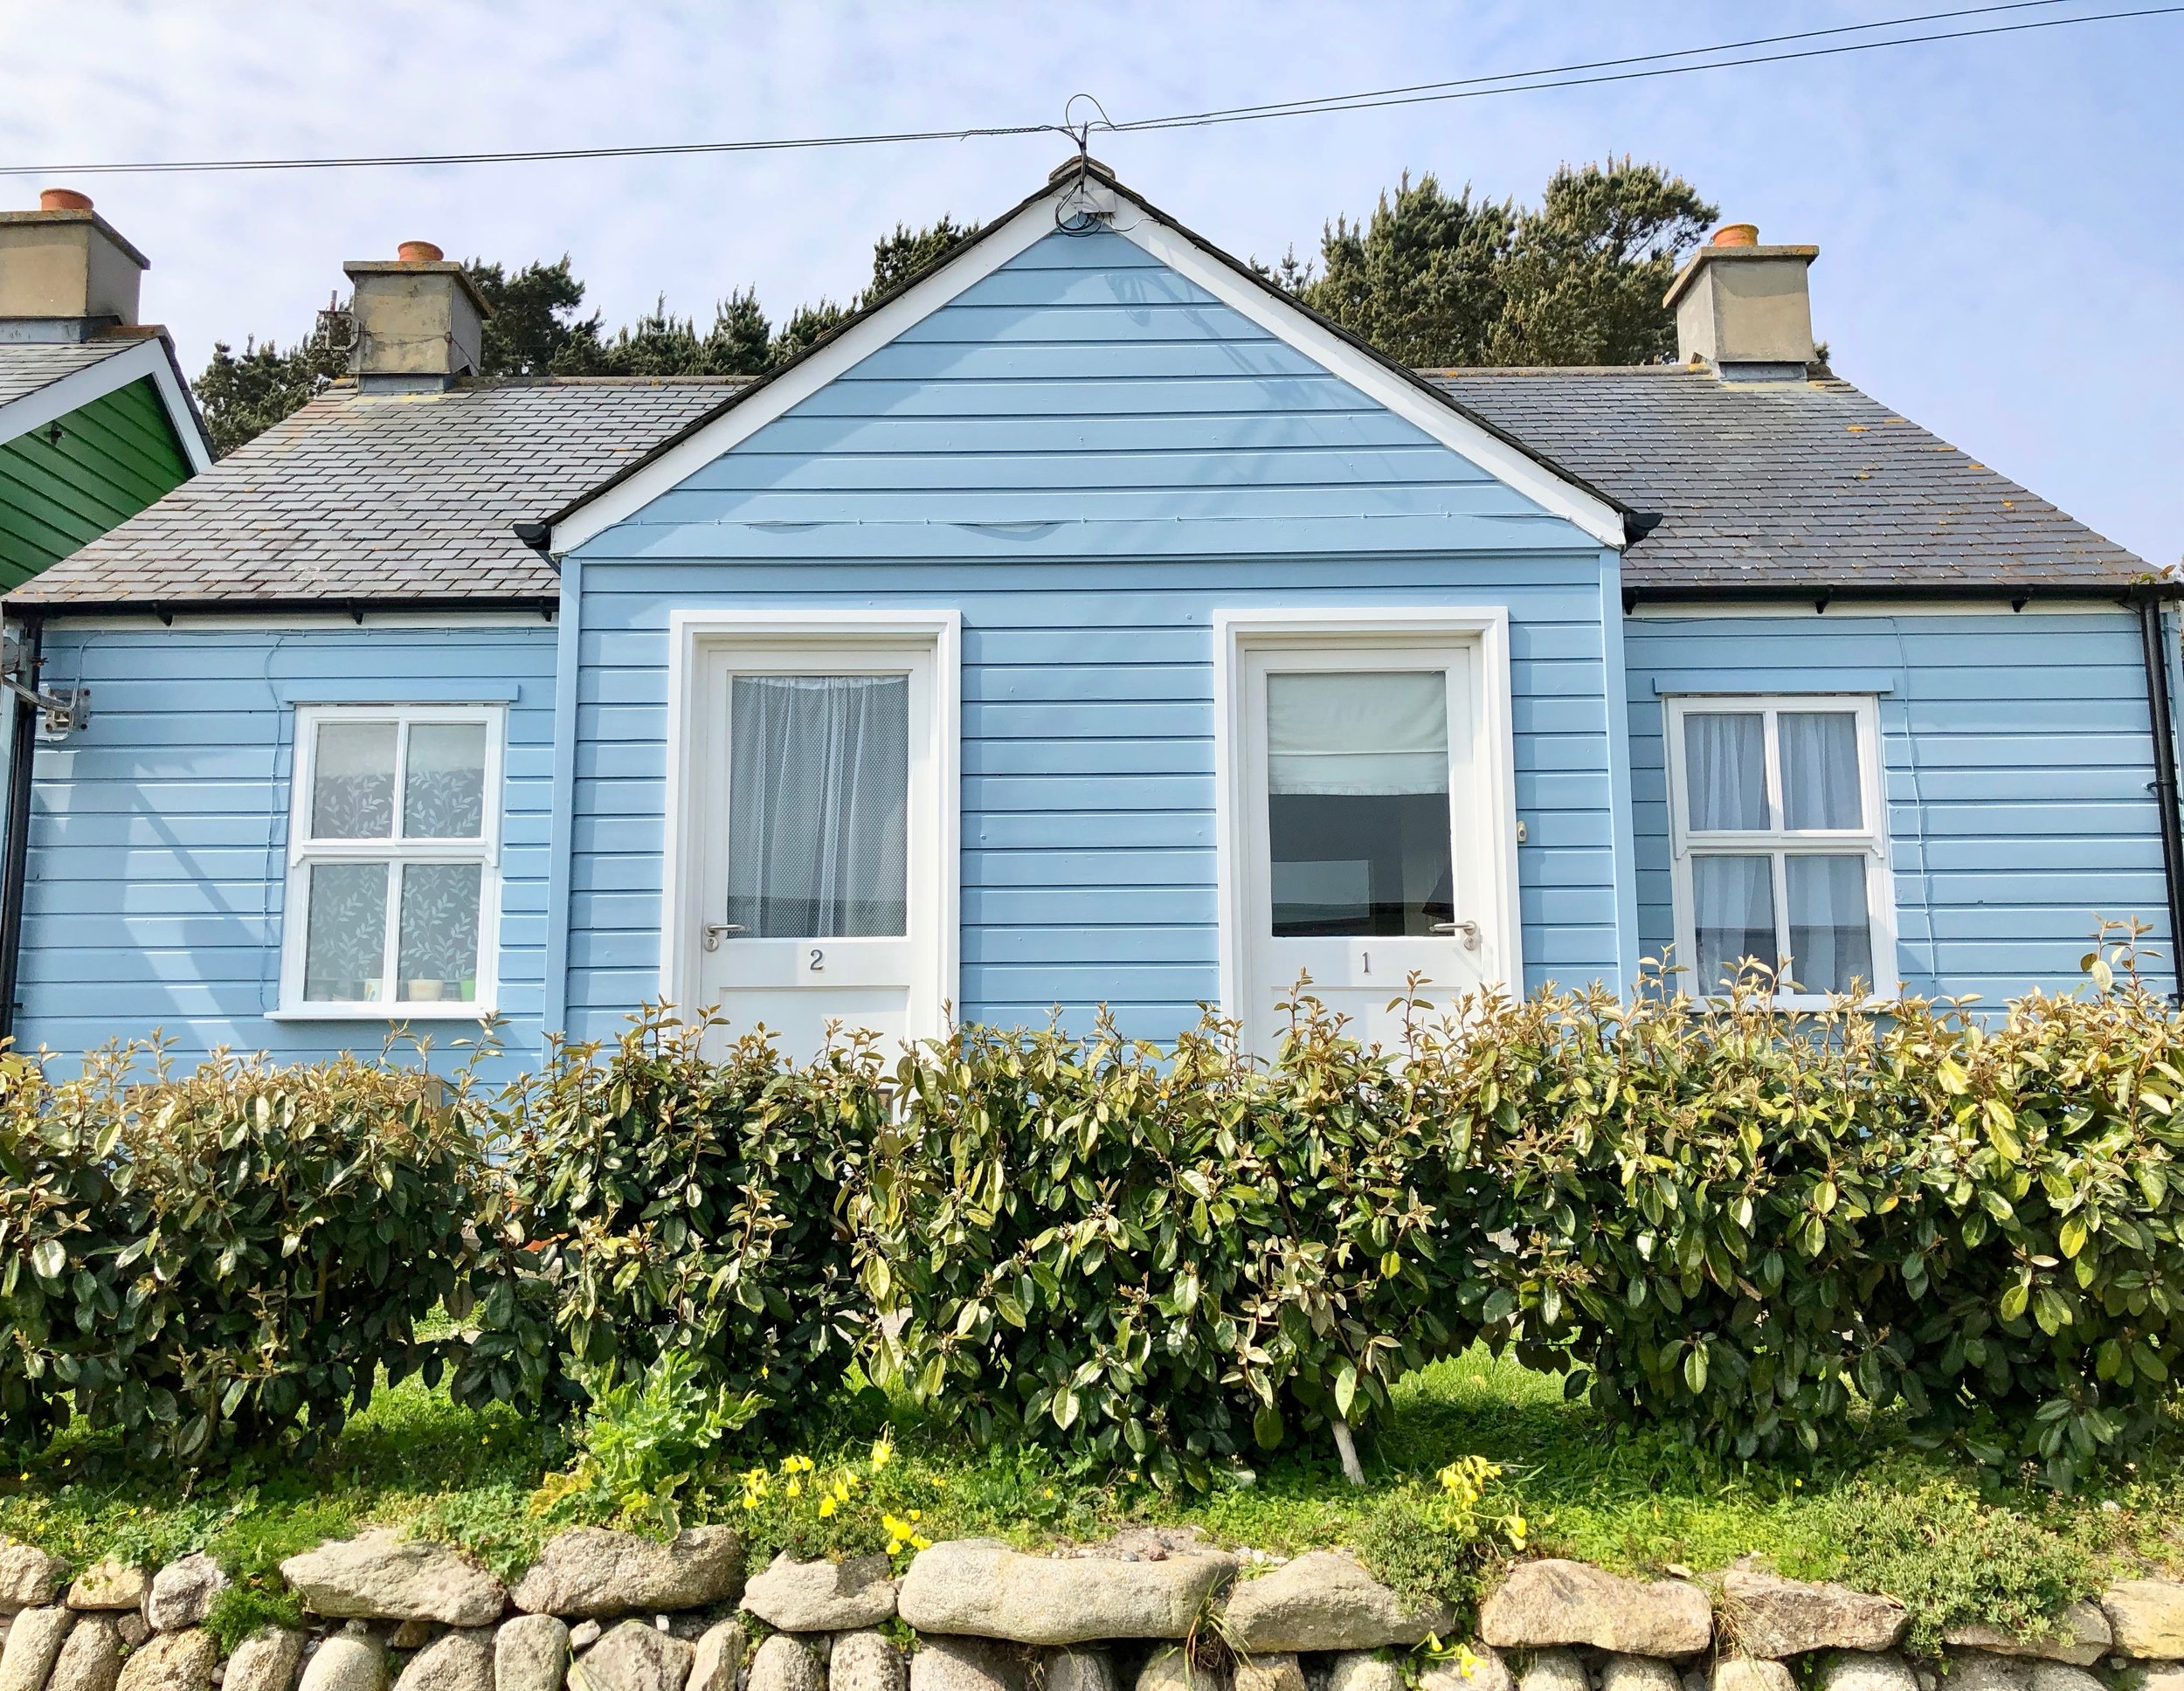 Cottage on Tresco Island, Scilly Isles (1).jpg